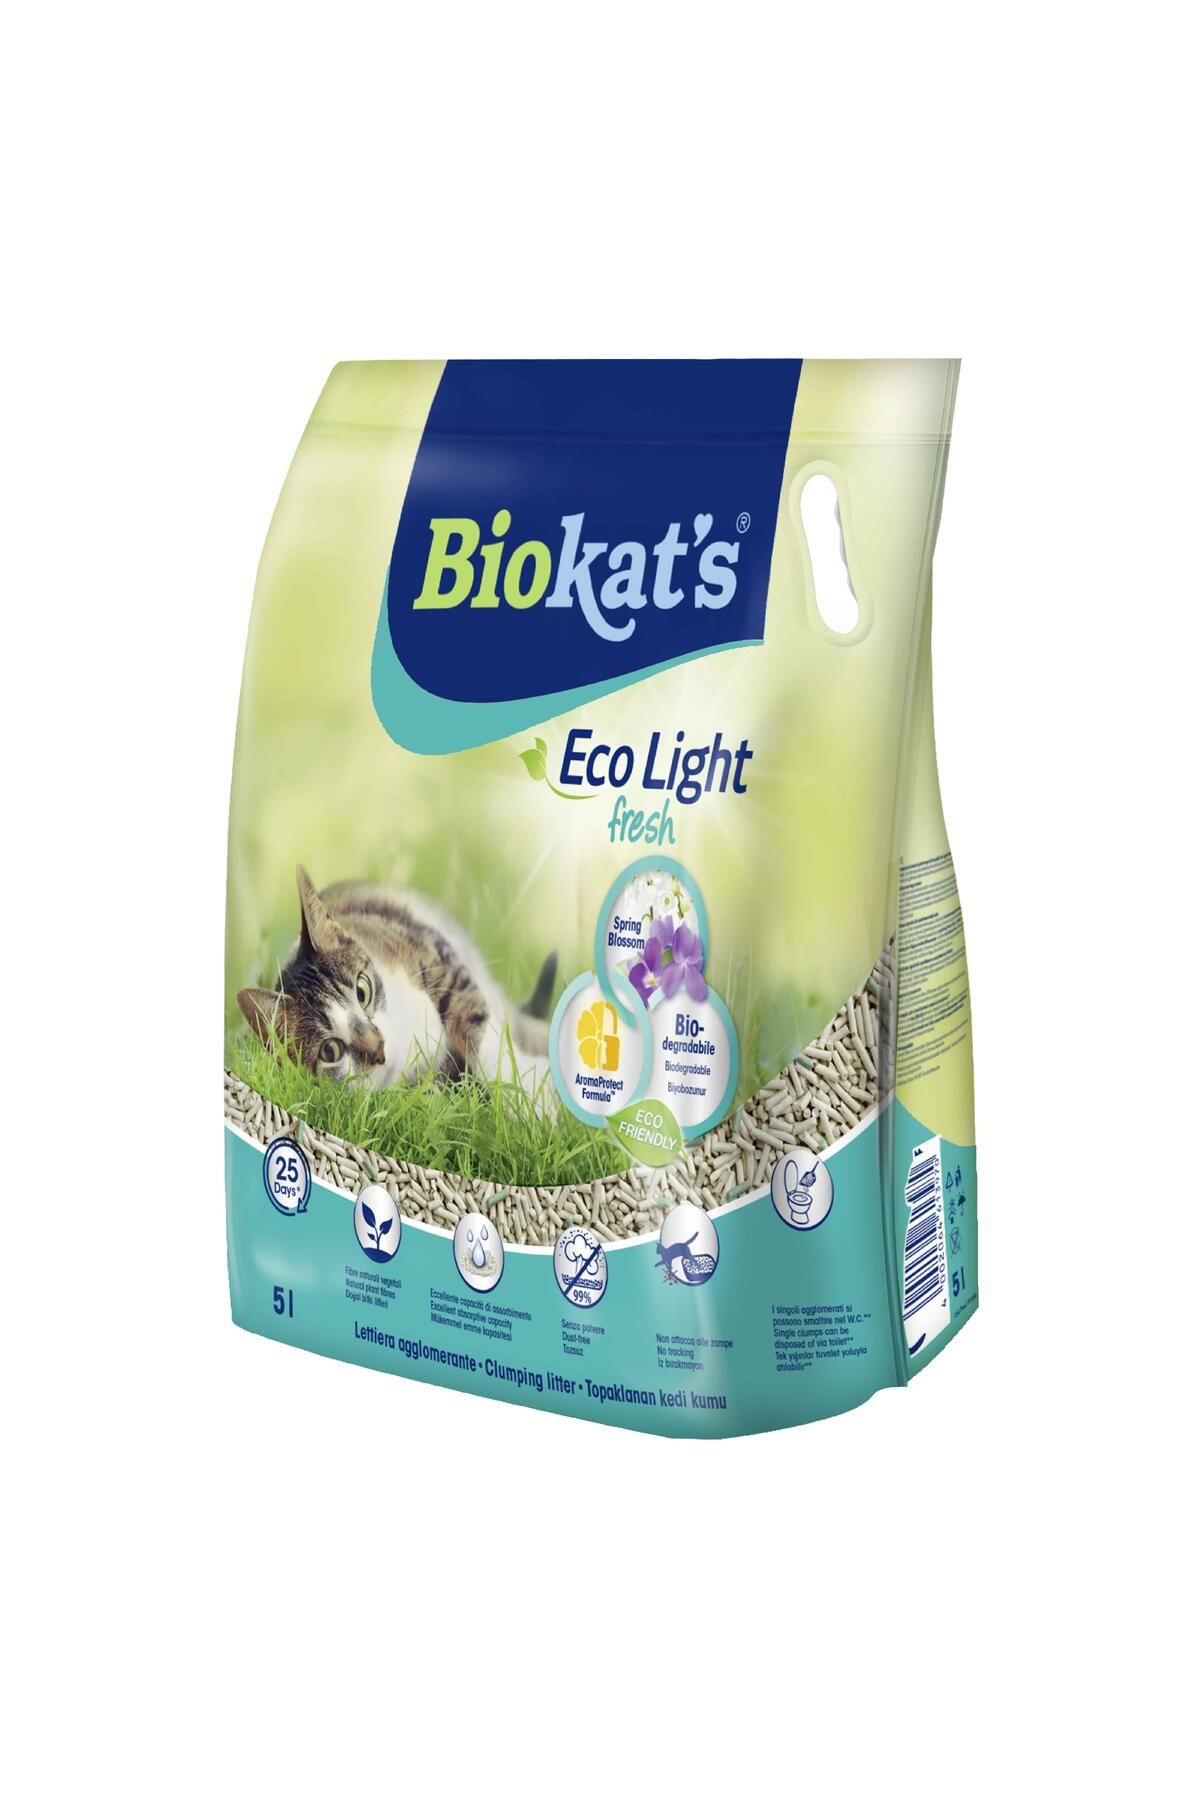 Biokat's Biokat's Eco Light Fresh Spring Blossom (BAHAR ÇİÇEĞİ KOKULU) Pelet Kedi Kumu 5 Lt